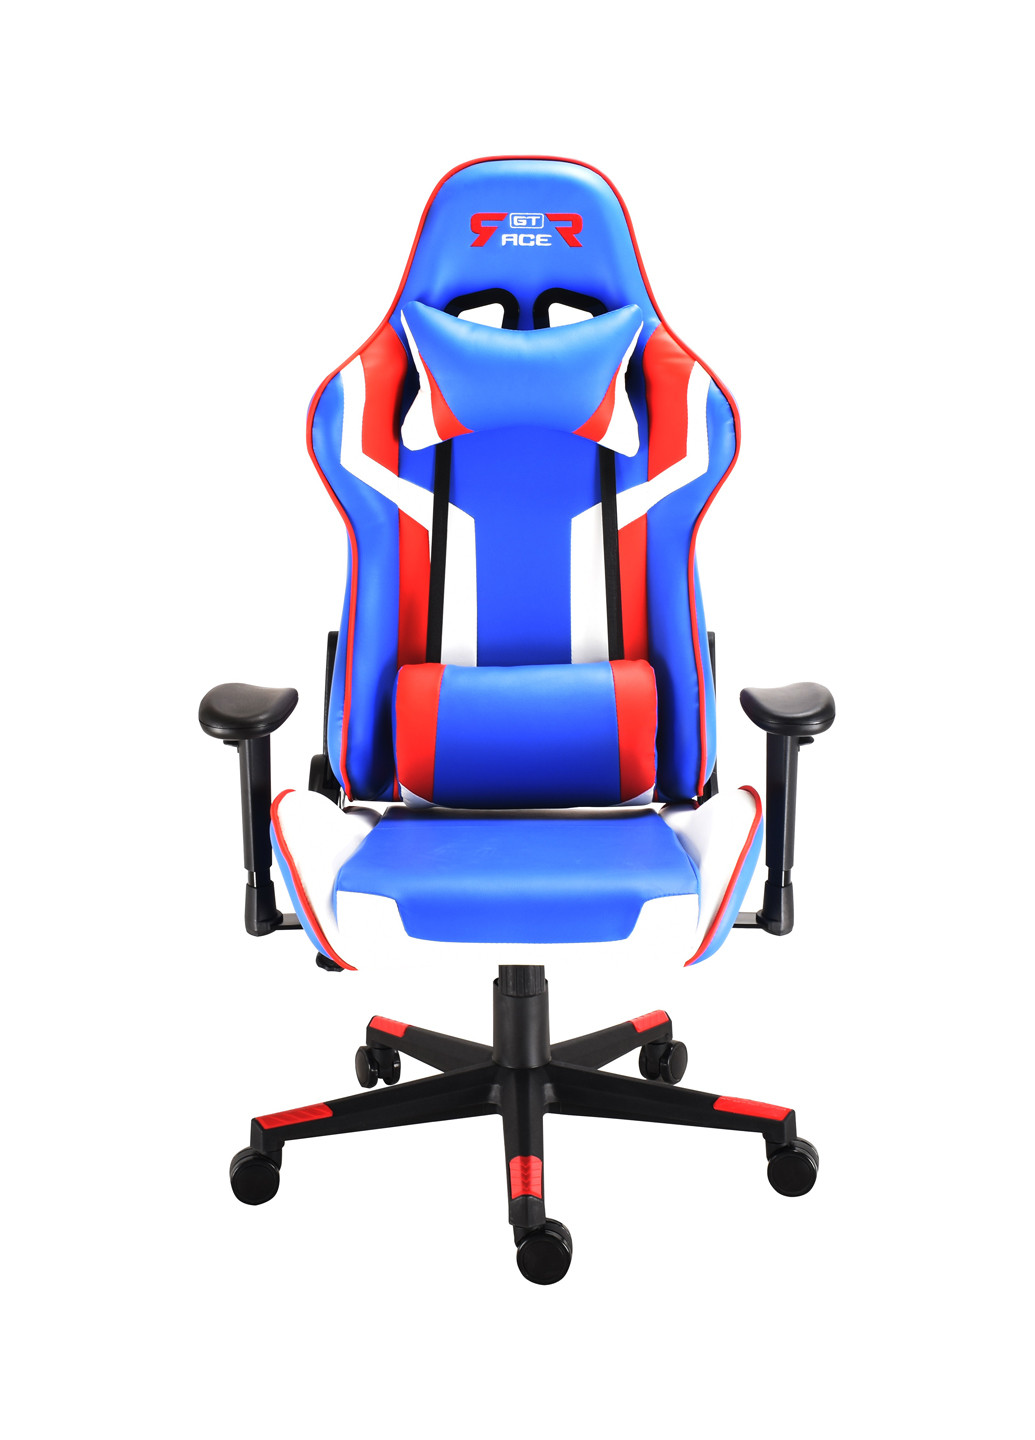 Кресло X-2530 Blue/White/Red GT Racer кресло gt racer x-2530 blue/white/red (143068495)